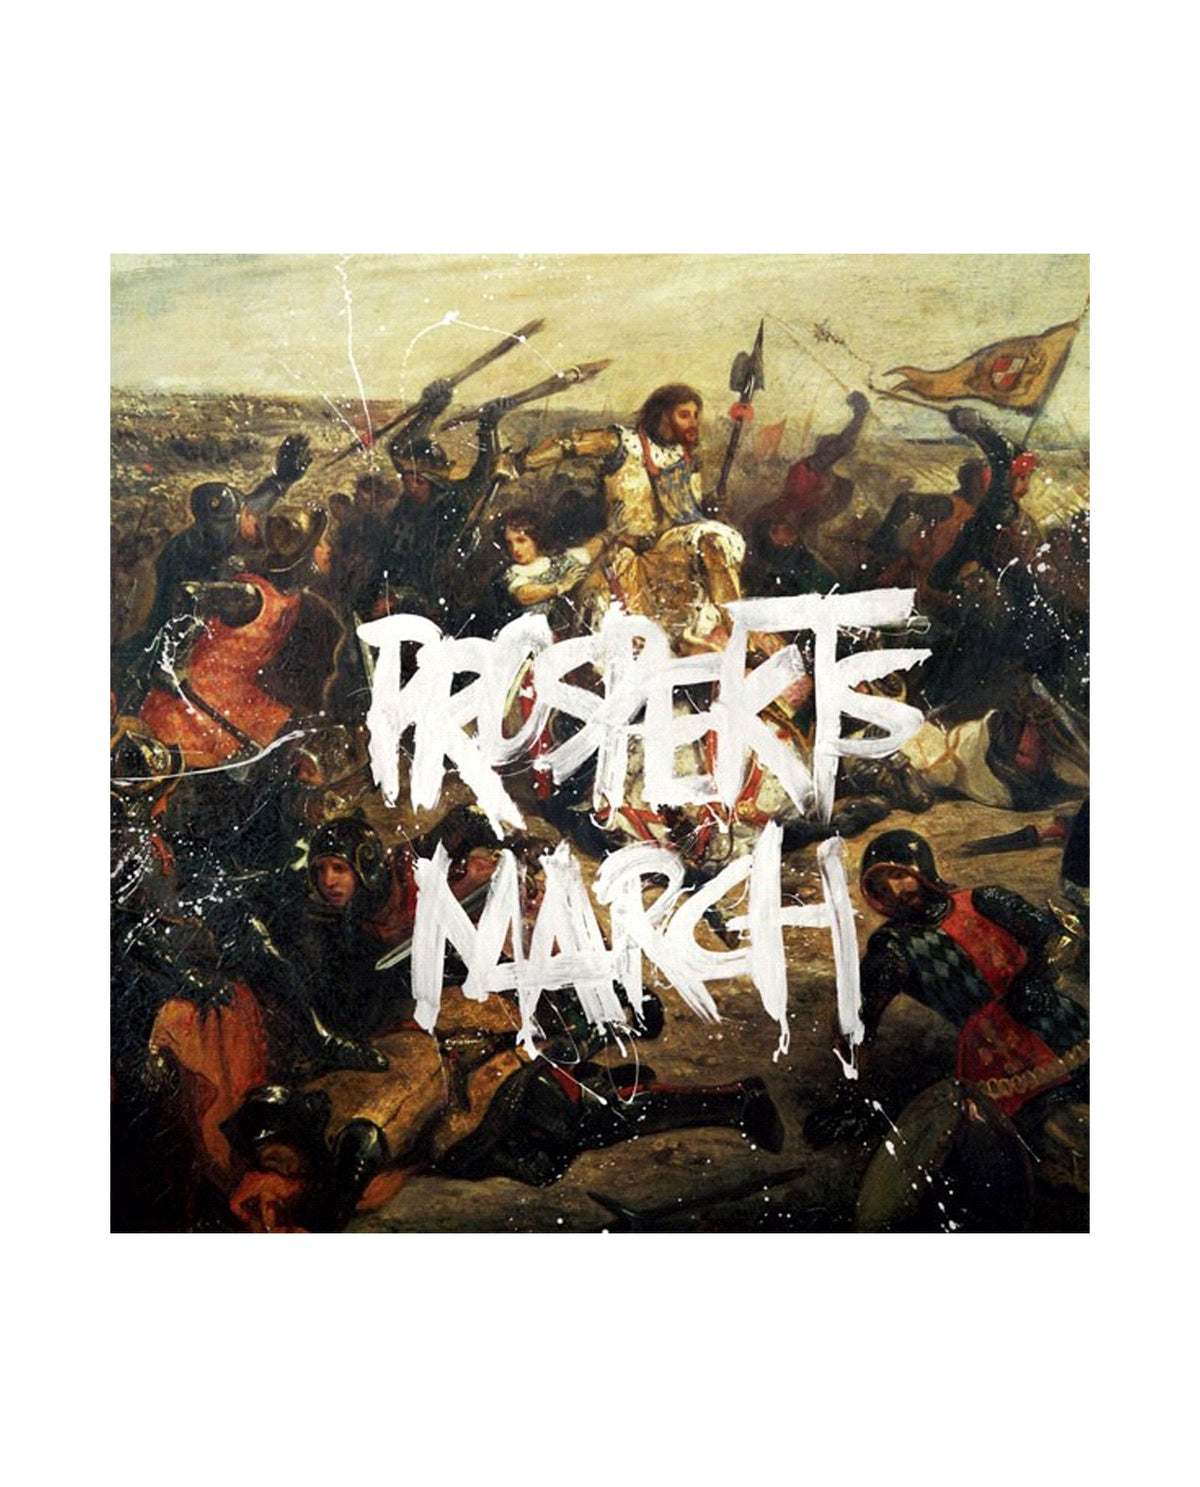 Coldplay - LP Vinilo Negro "Prospekt's March" - D2fy · Rocktud - Rocktud